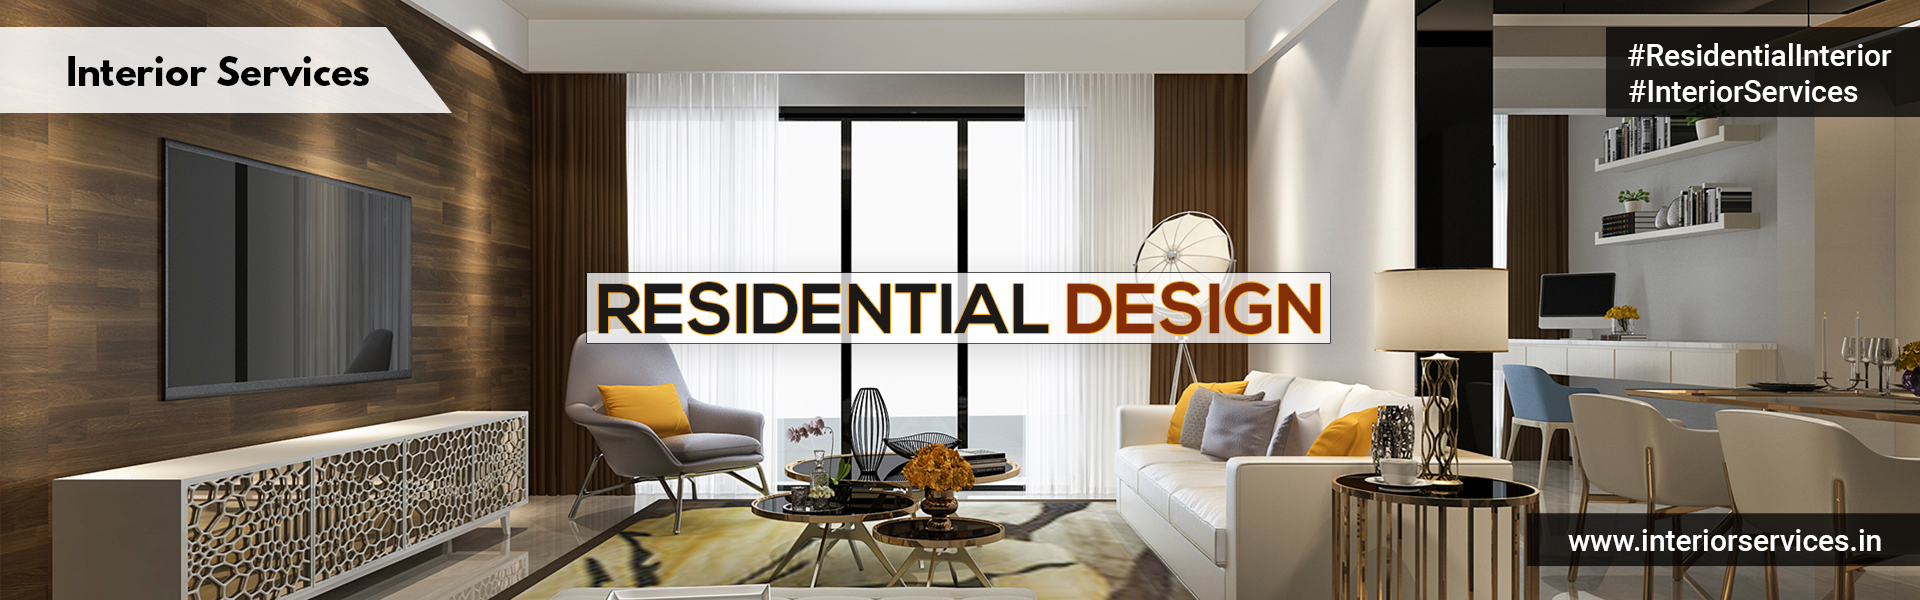 Interior Services Residential Design Image